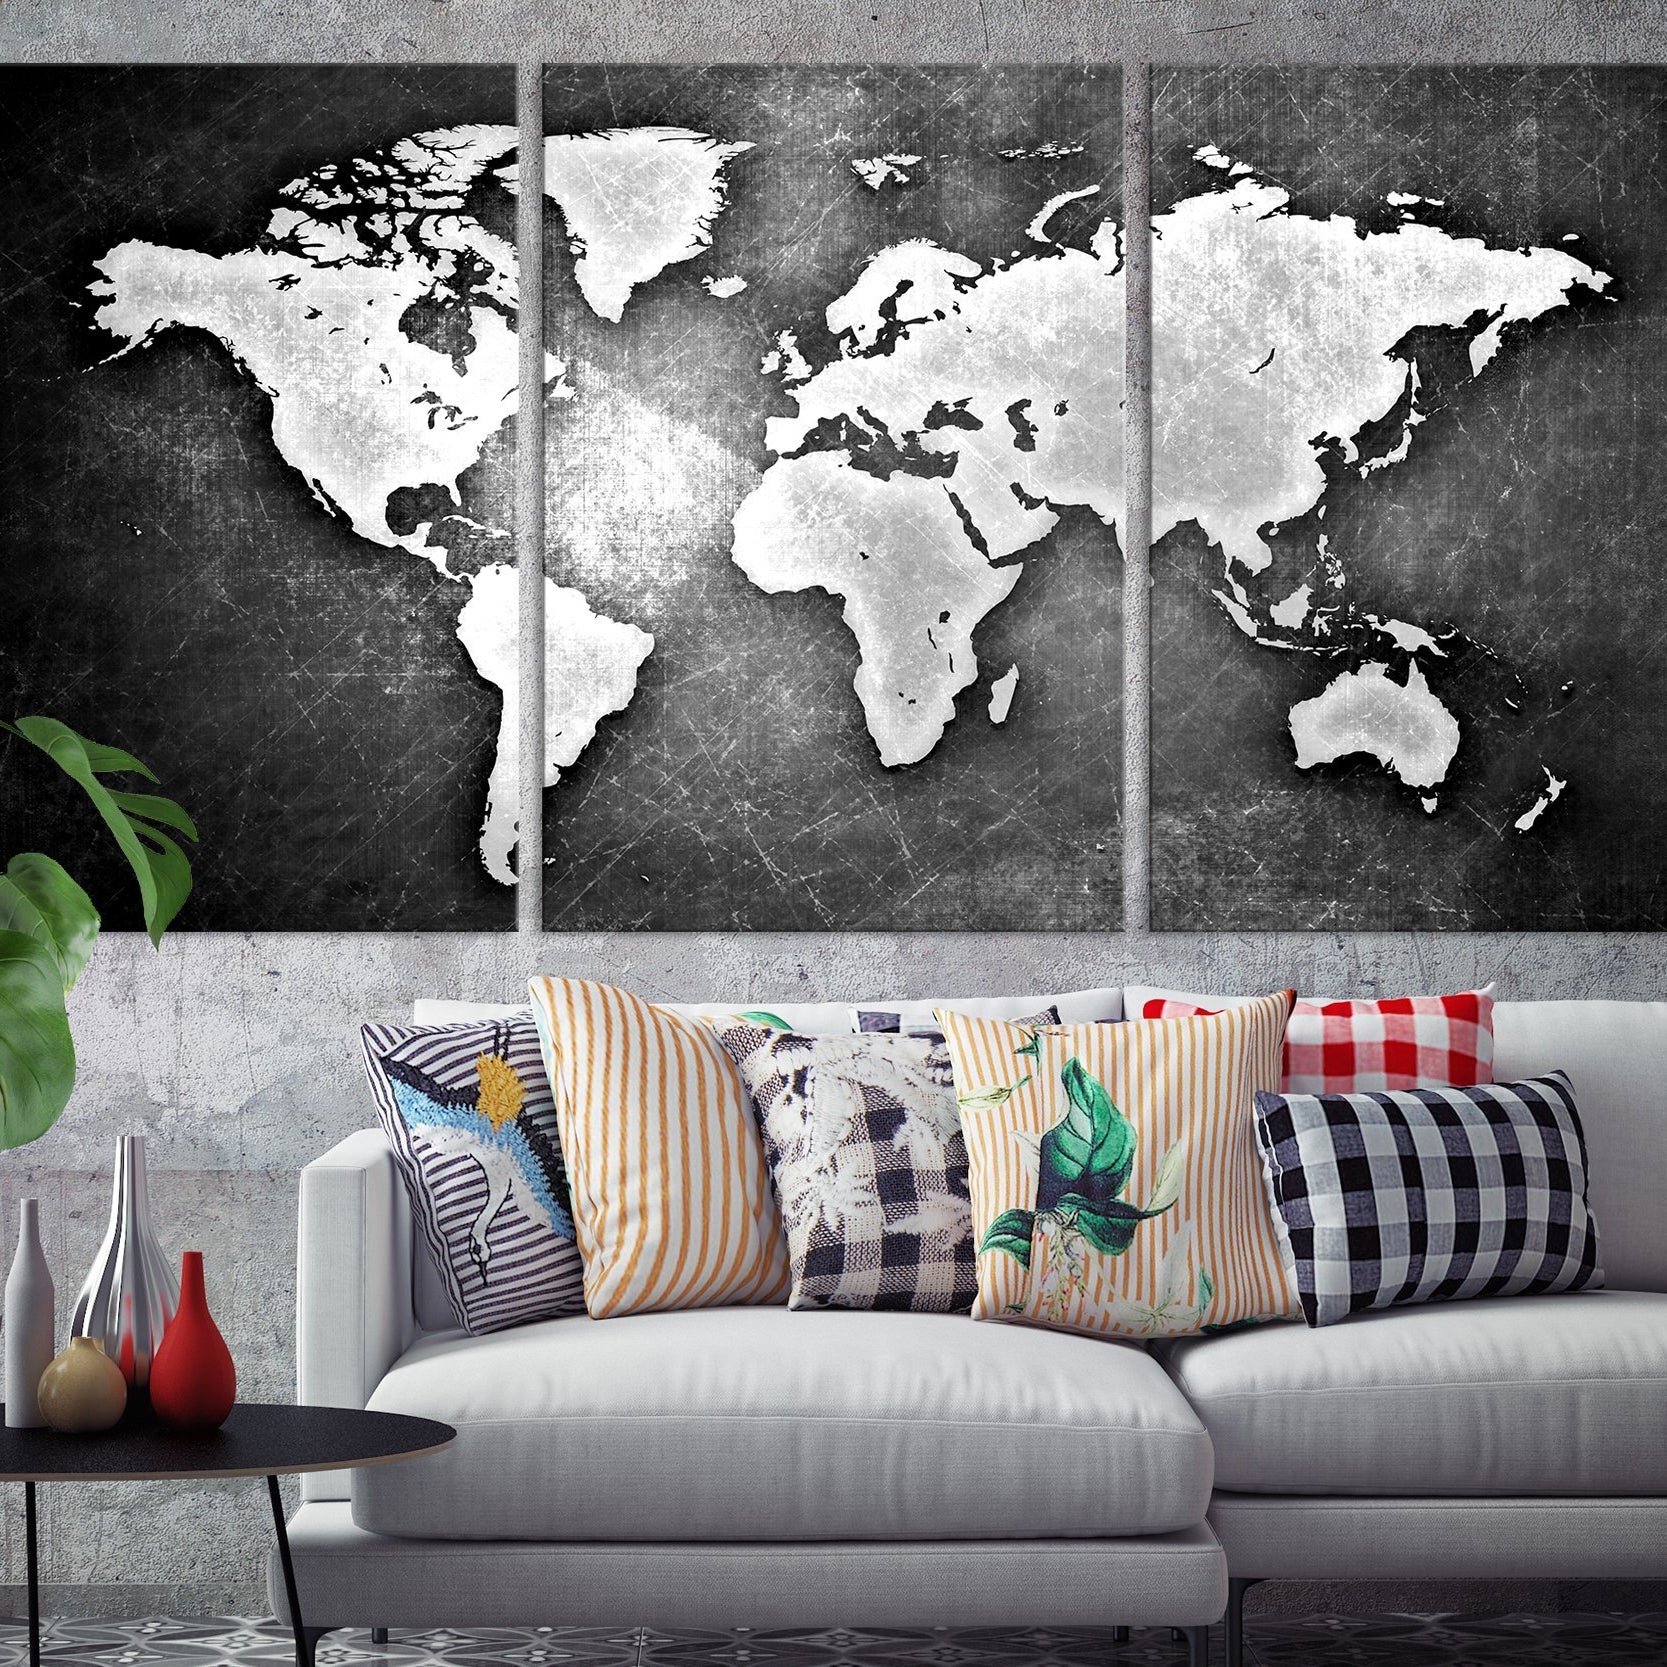 N14451 - Modern Large Black Metalic Wall Art World Map Map Canvas Print for Living Room Decor Art- Ready to Hang-Giclee Canvas Print-World Map Wall Art-3 Panel-Per P. 16x24-Extra Large Wall Art Canvas Print